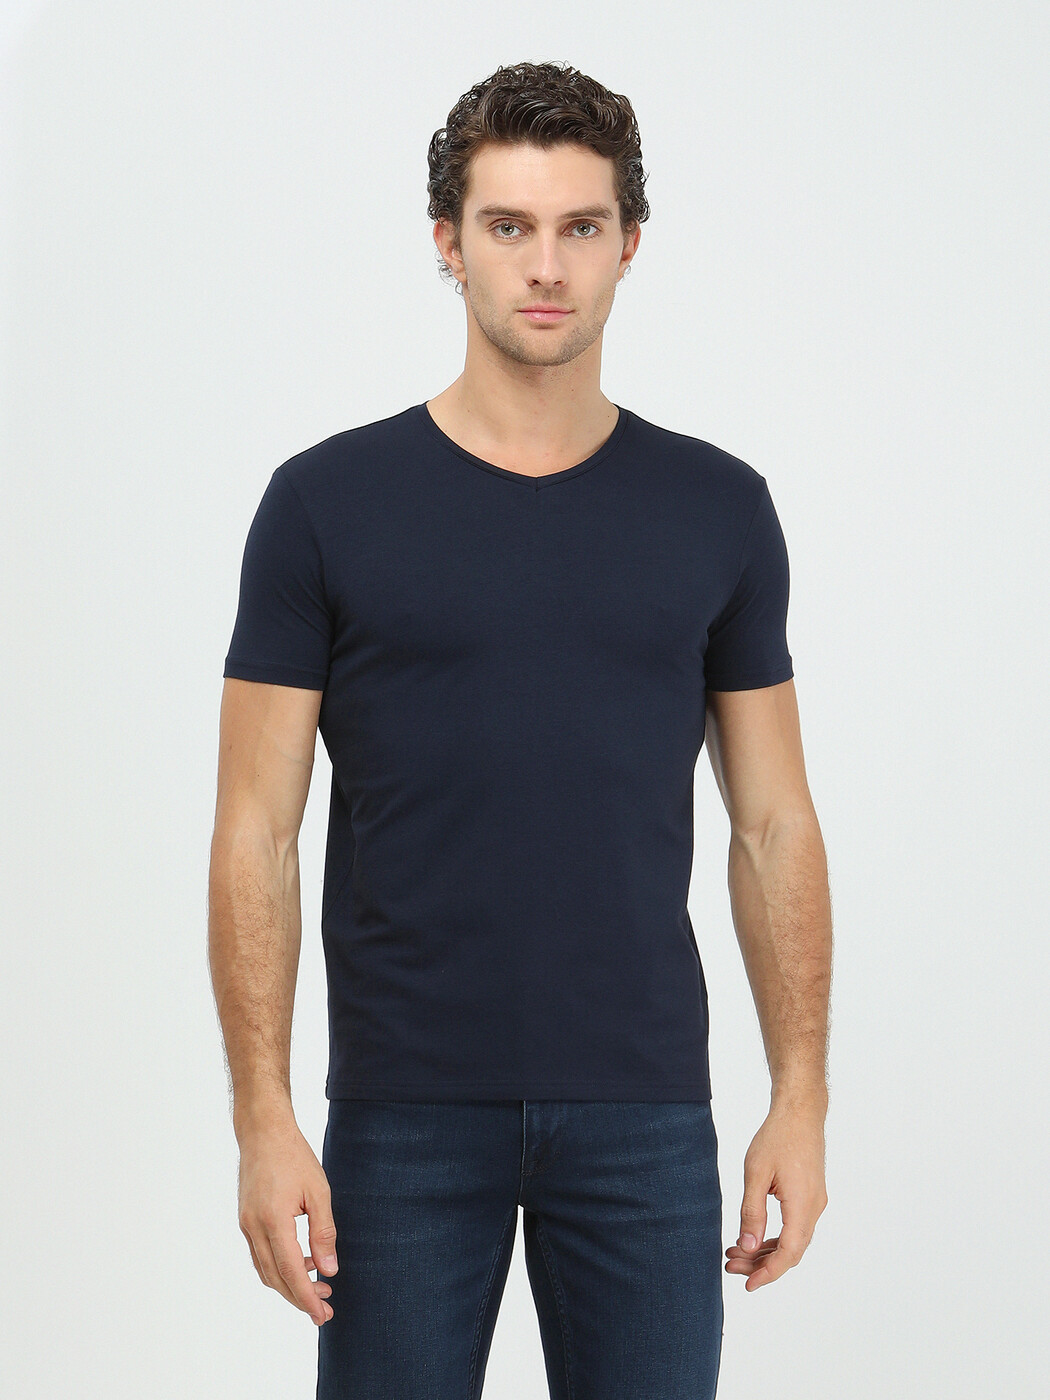 KİP - Lacivert Pamuk Karışımlı T-Shirt (1)